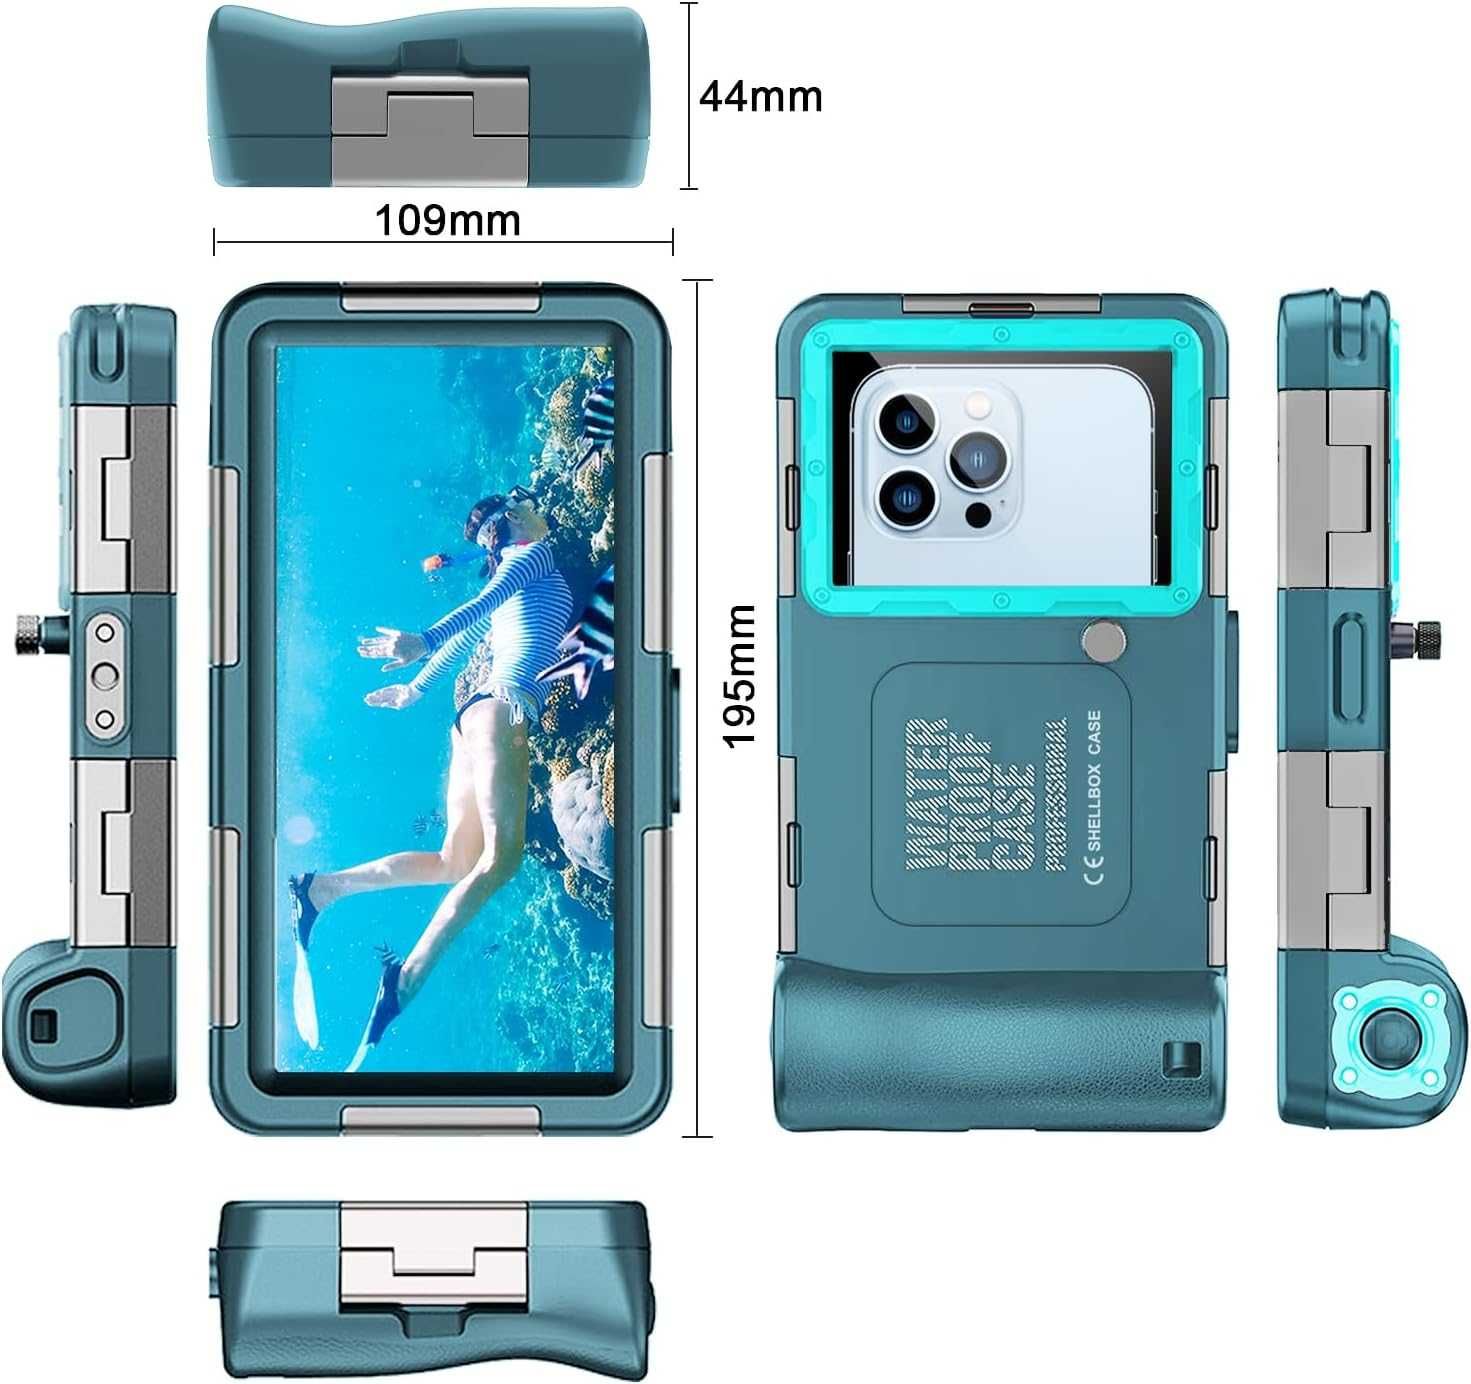 Husa waterproof pentru Iphone Samsung Motorola etc filmari subacvatice